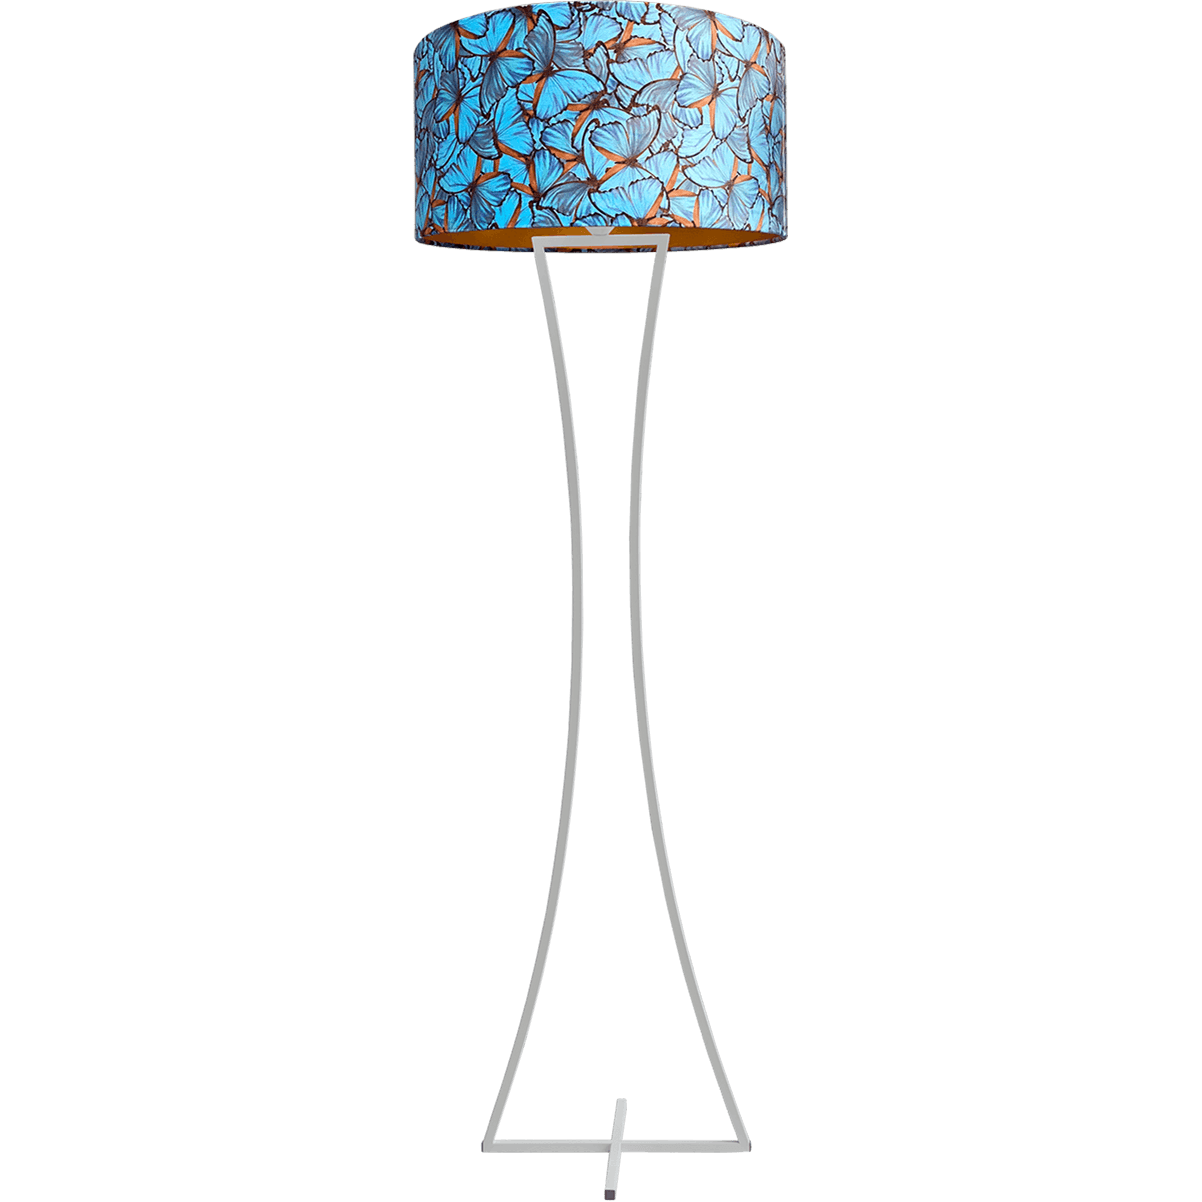 Vloerlamp Cross Woman wit structuur hoogte 158cm inclusief lampenkap met butterflymotief Artik butterfly 52/52/25 - MASTERLIGHT